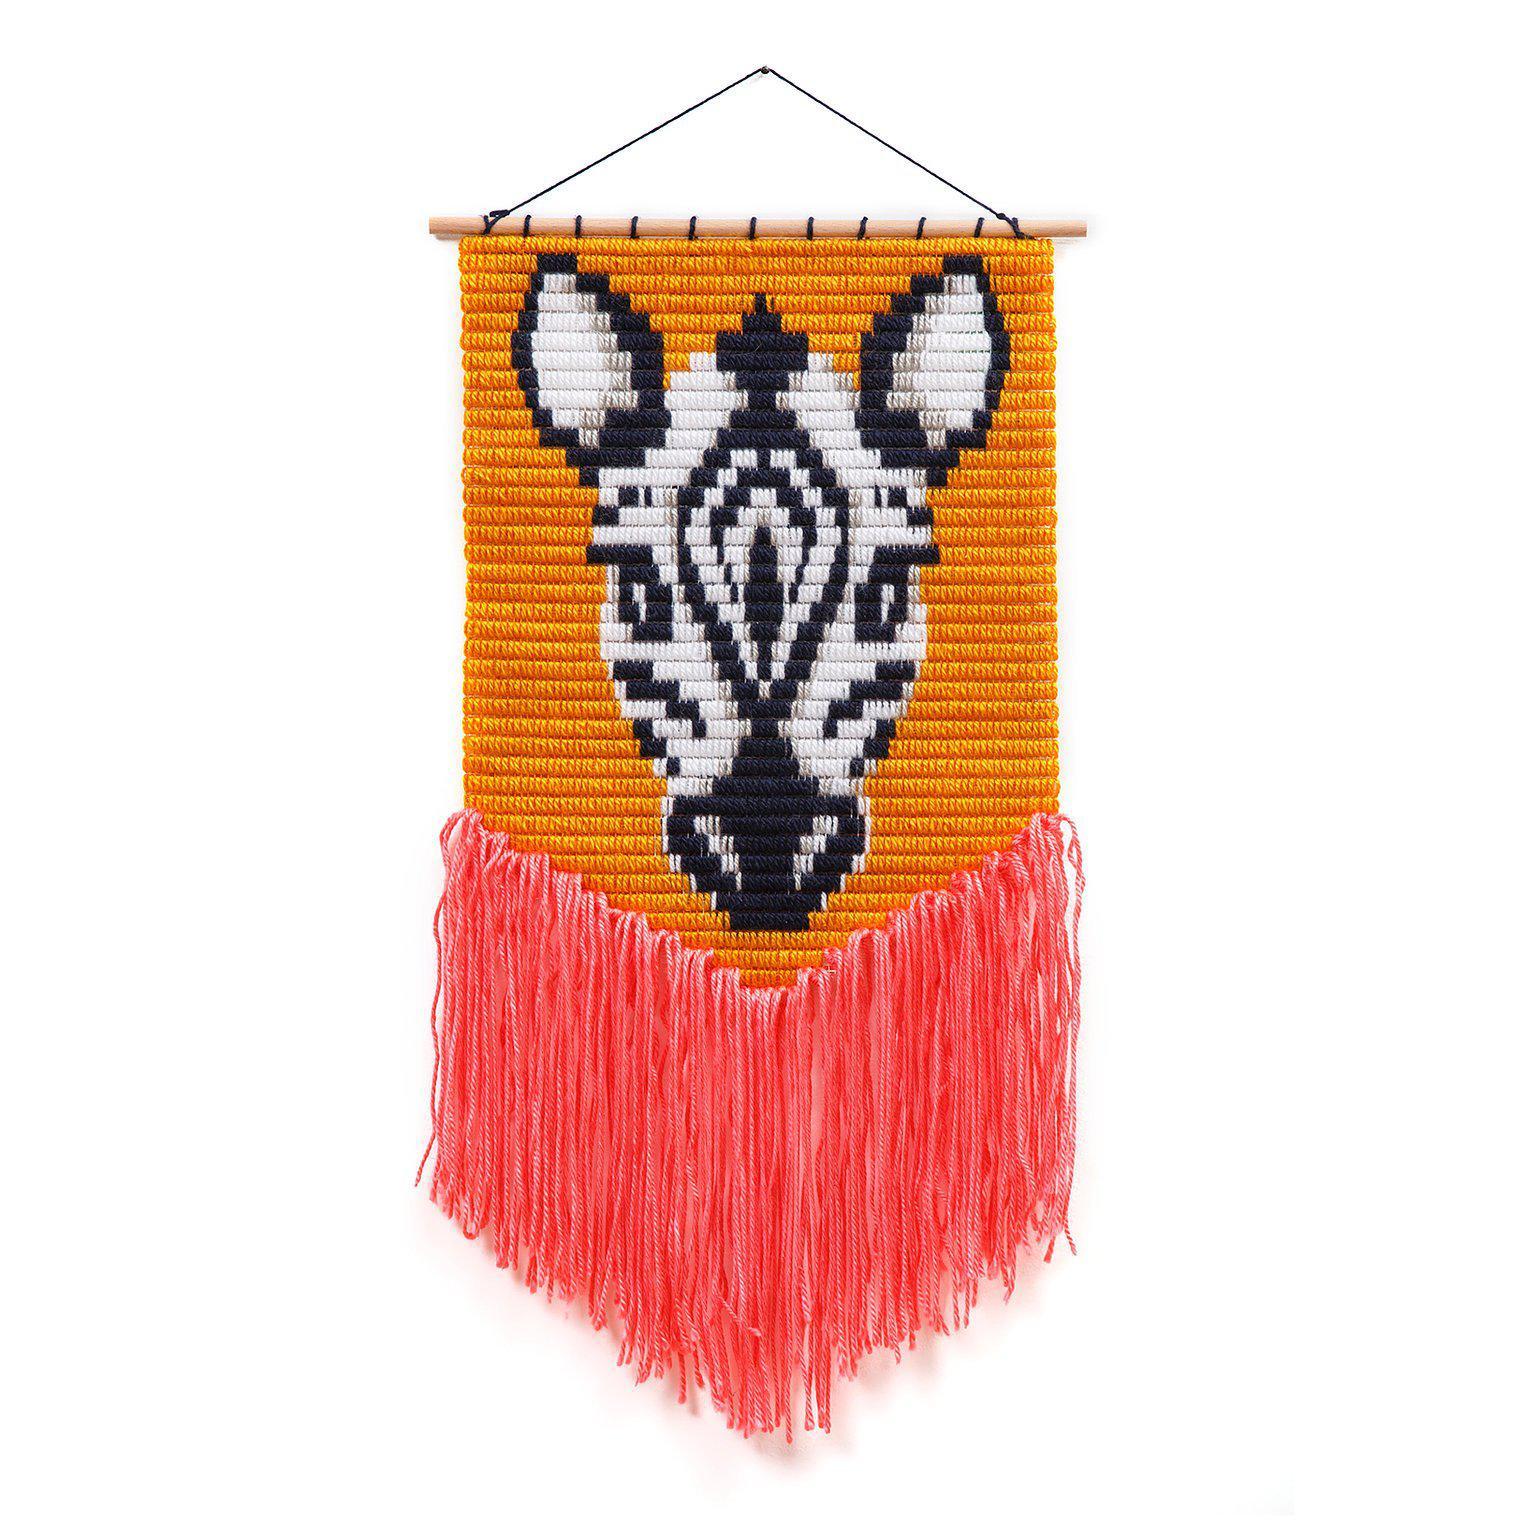 SOZO-Zebra Wall Art Embroidery Kit-embroidery/xstitch kit-gather here online